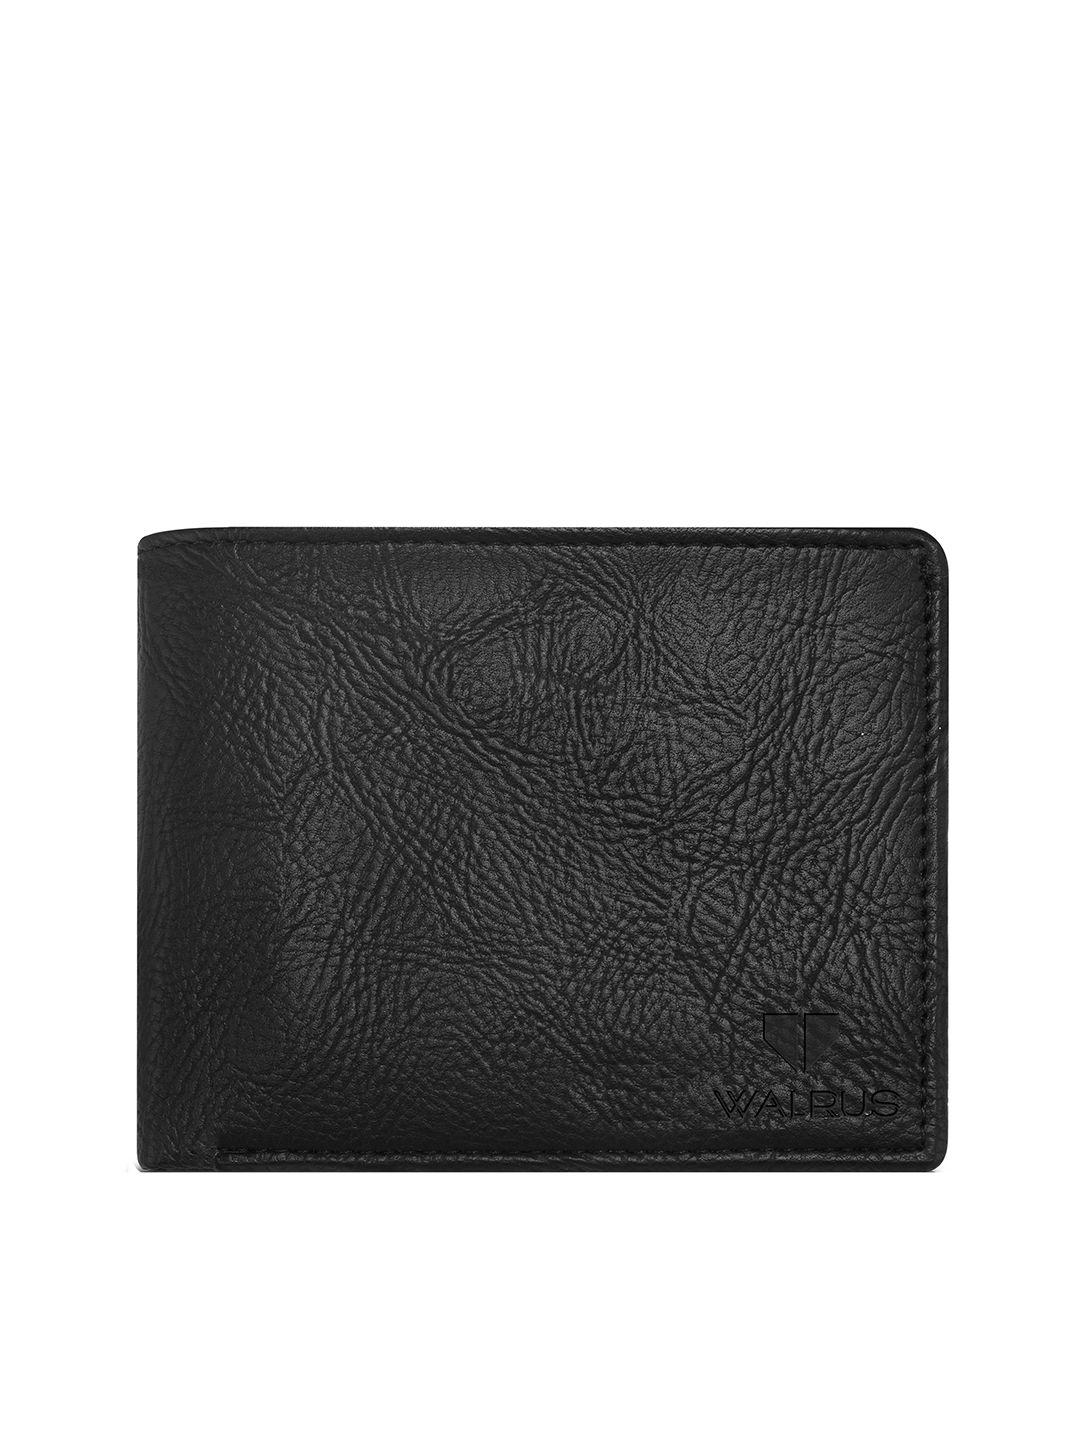 walrus men black two fold wallet with sim card holder